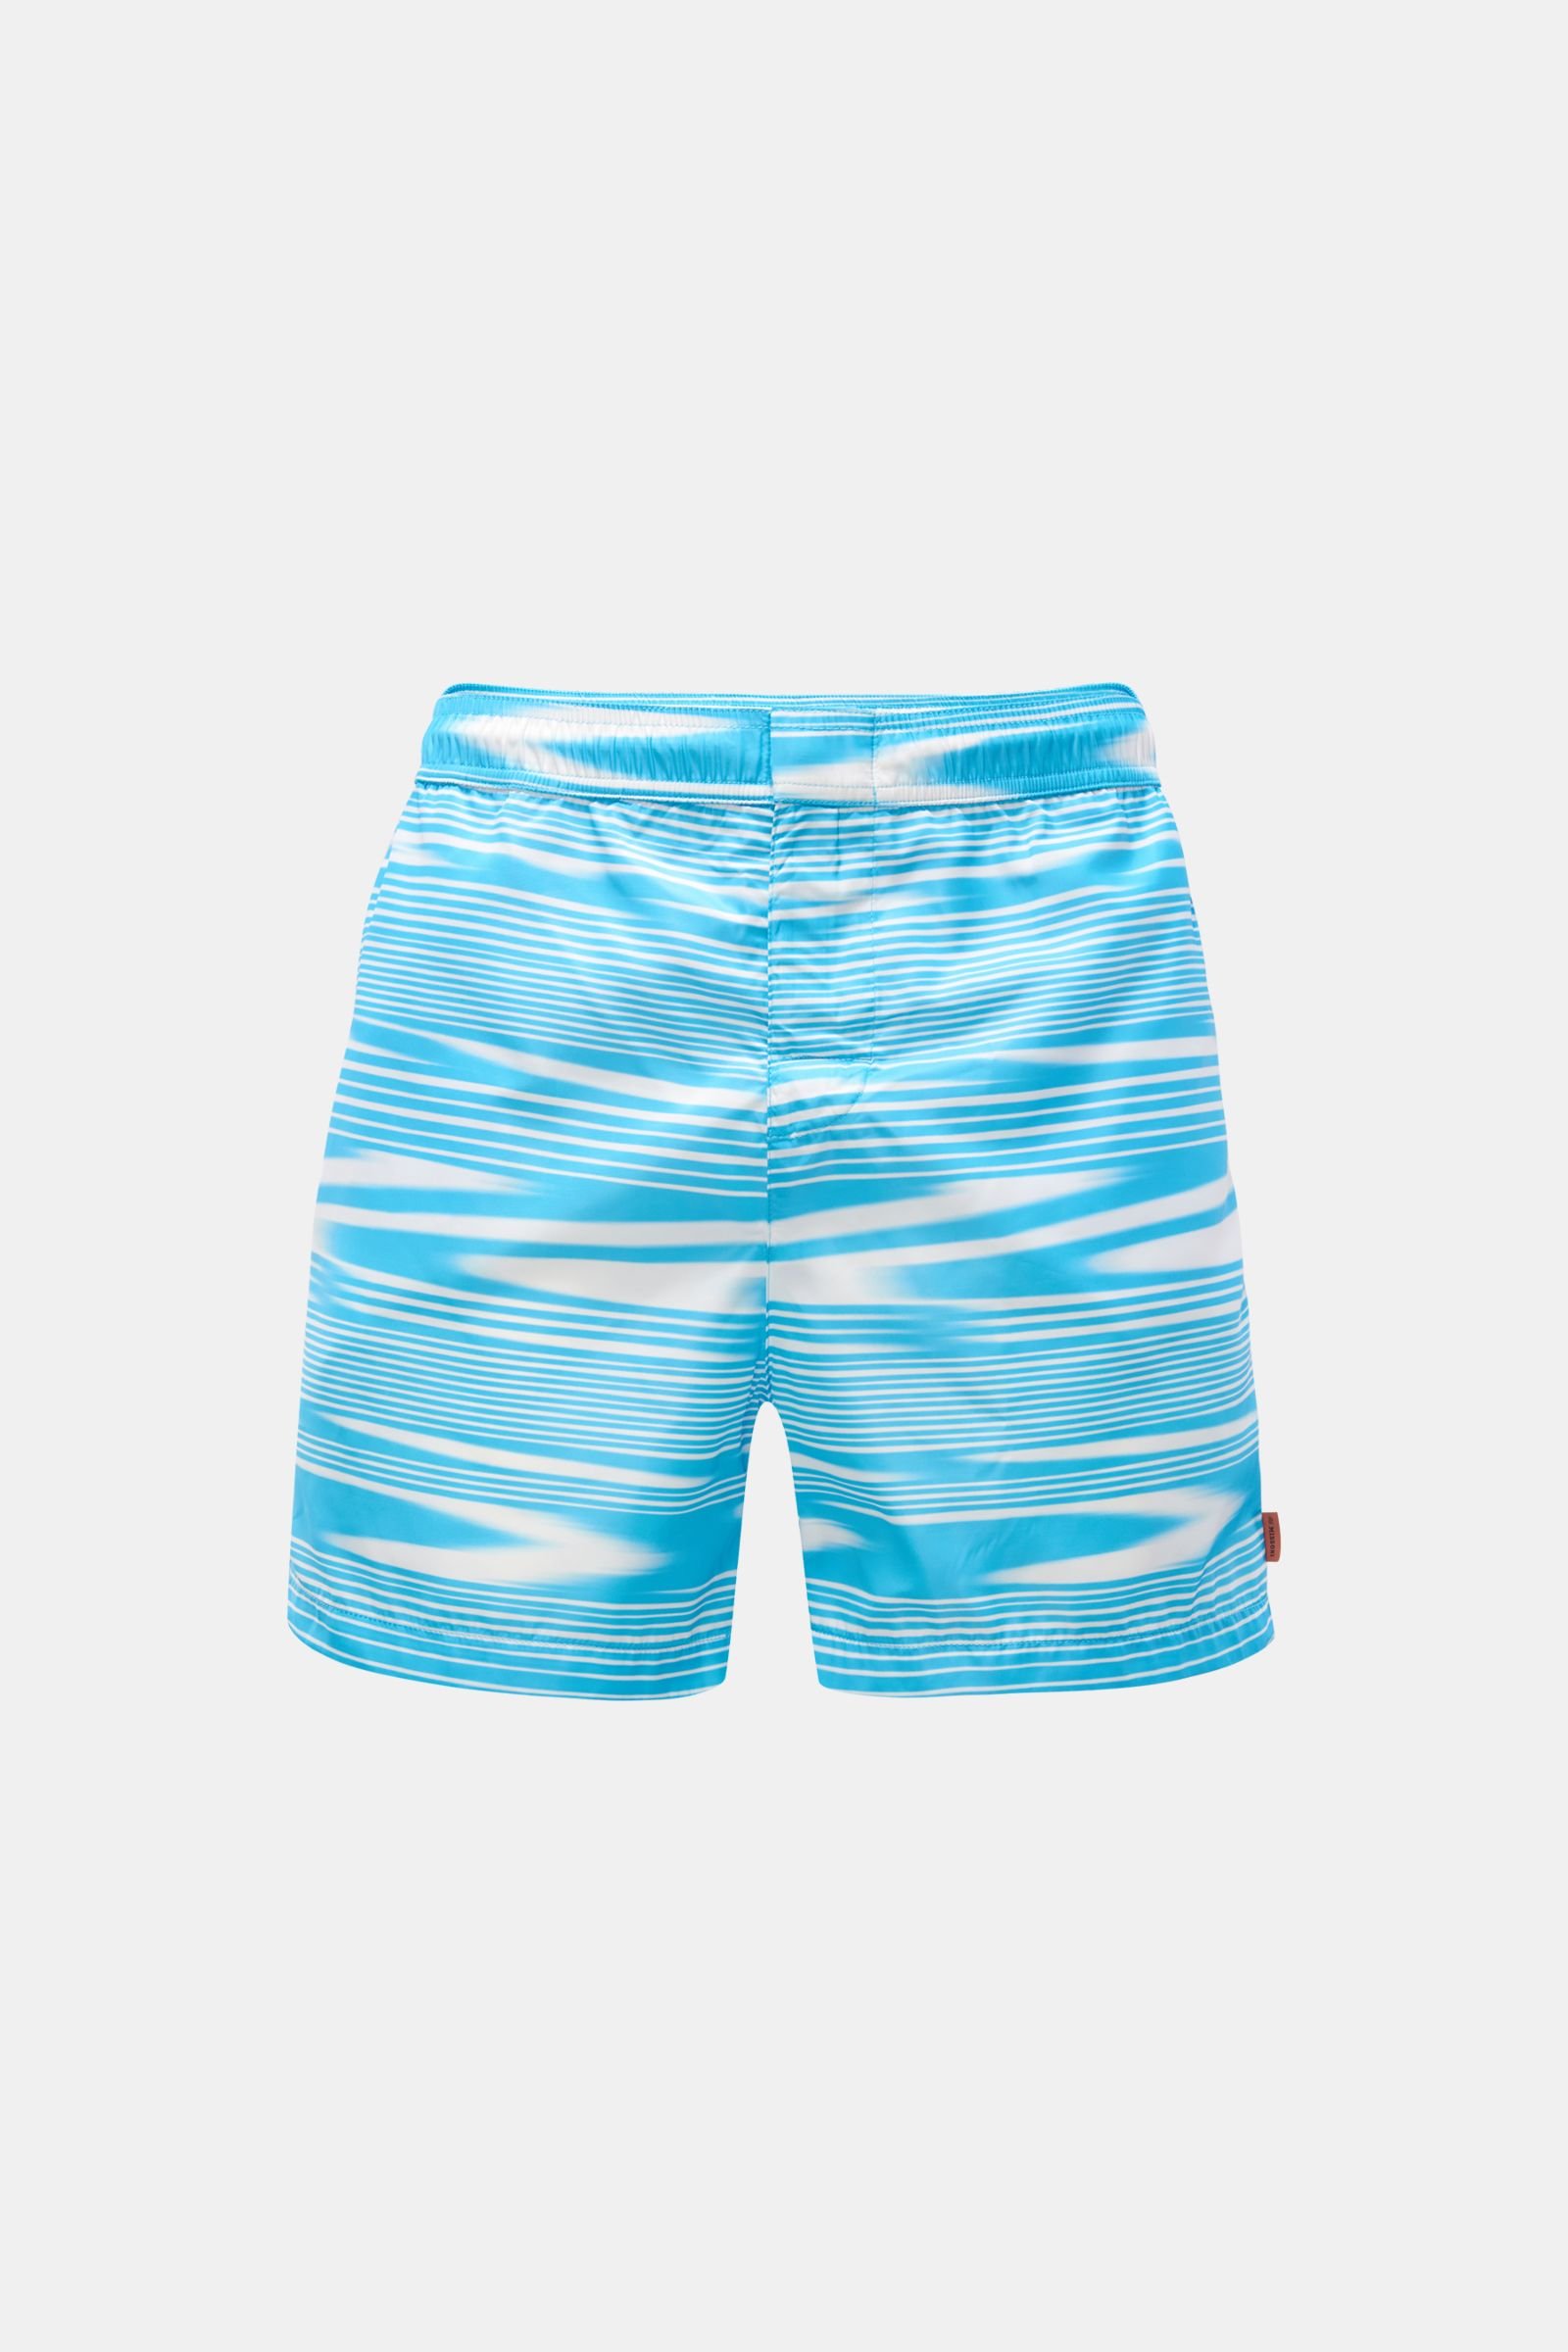 Swim shorts turquoise/white striped 